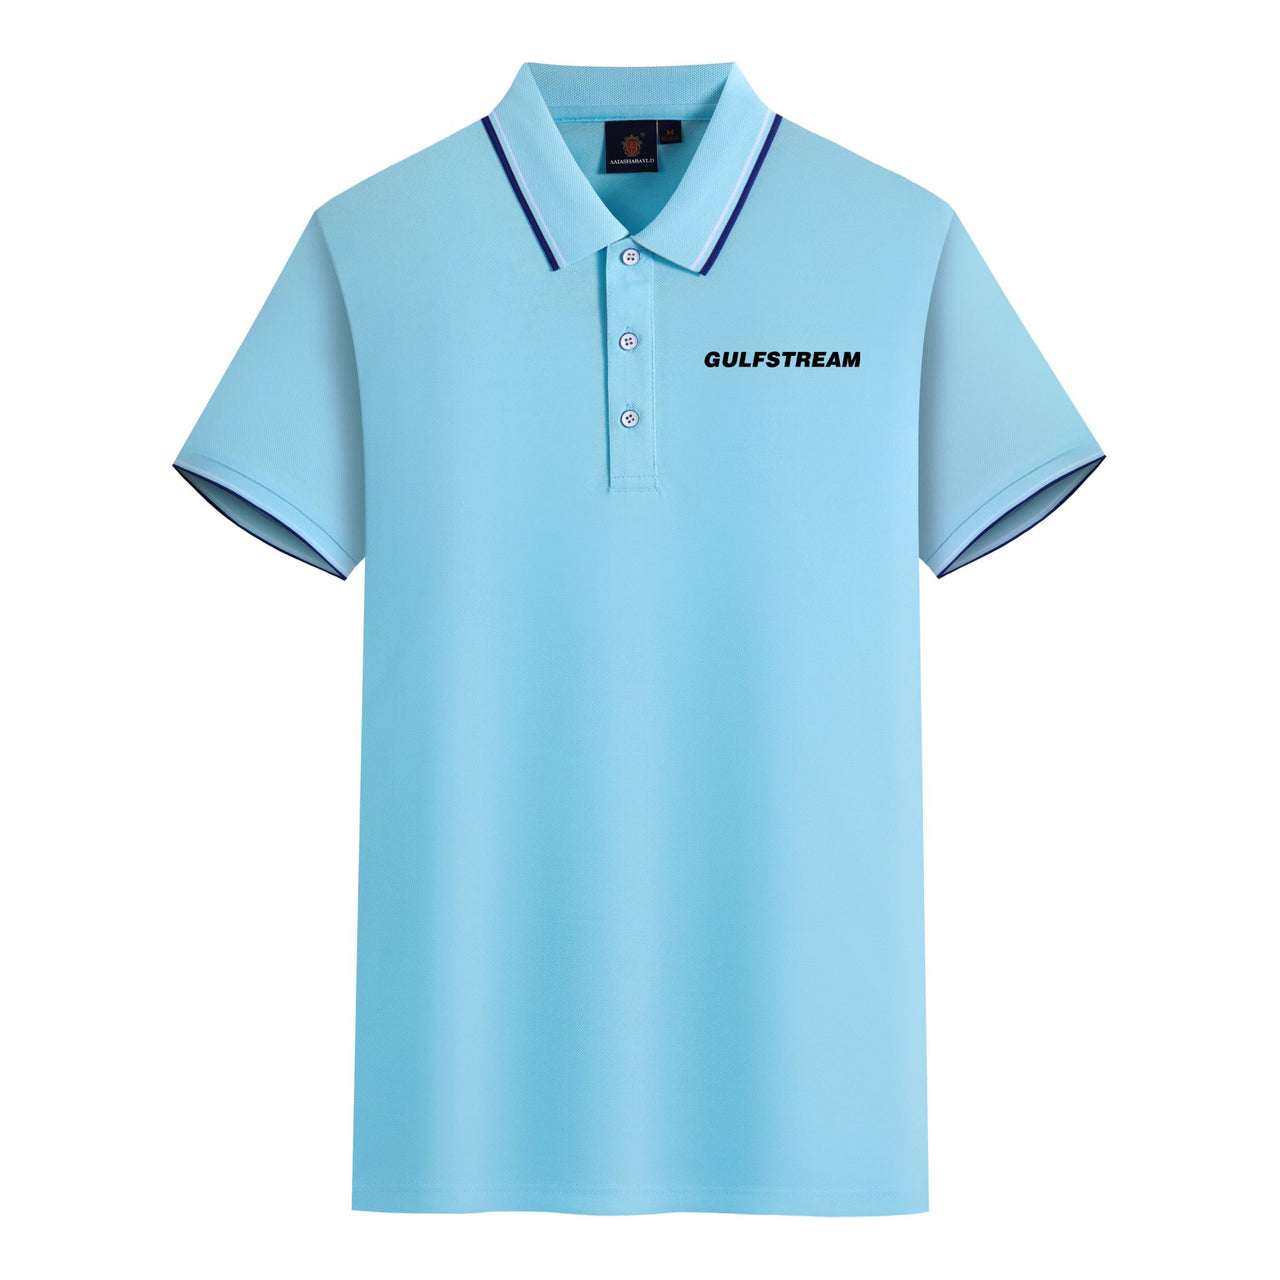 Gulfstream & Text Designed Stylish Polo T-Shirts